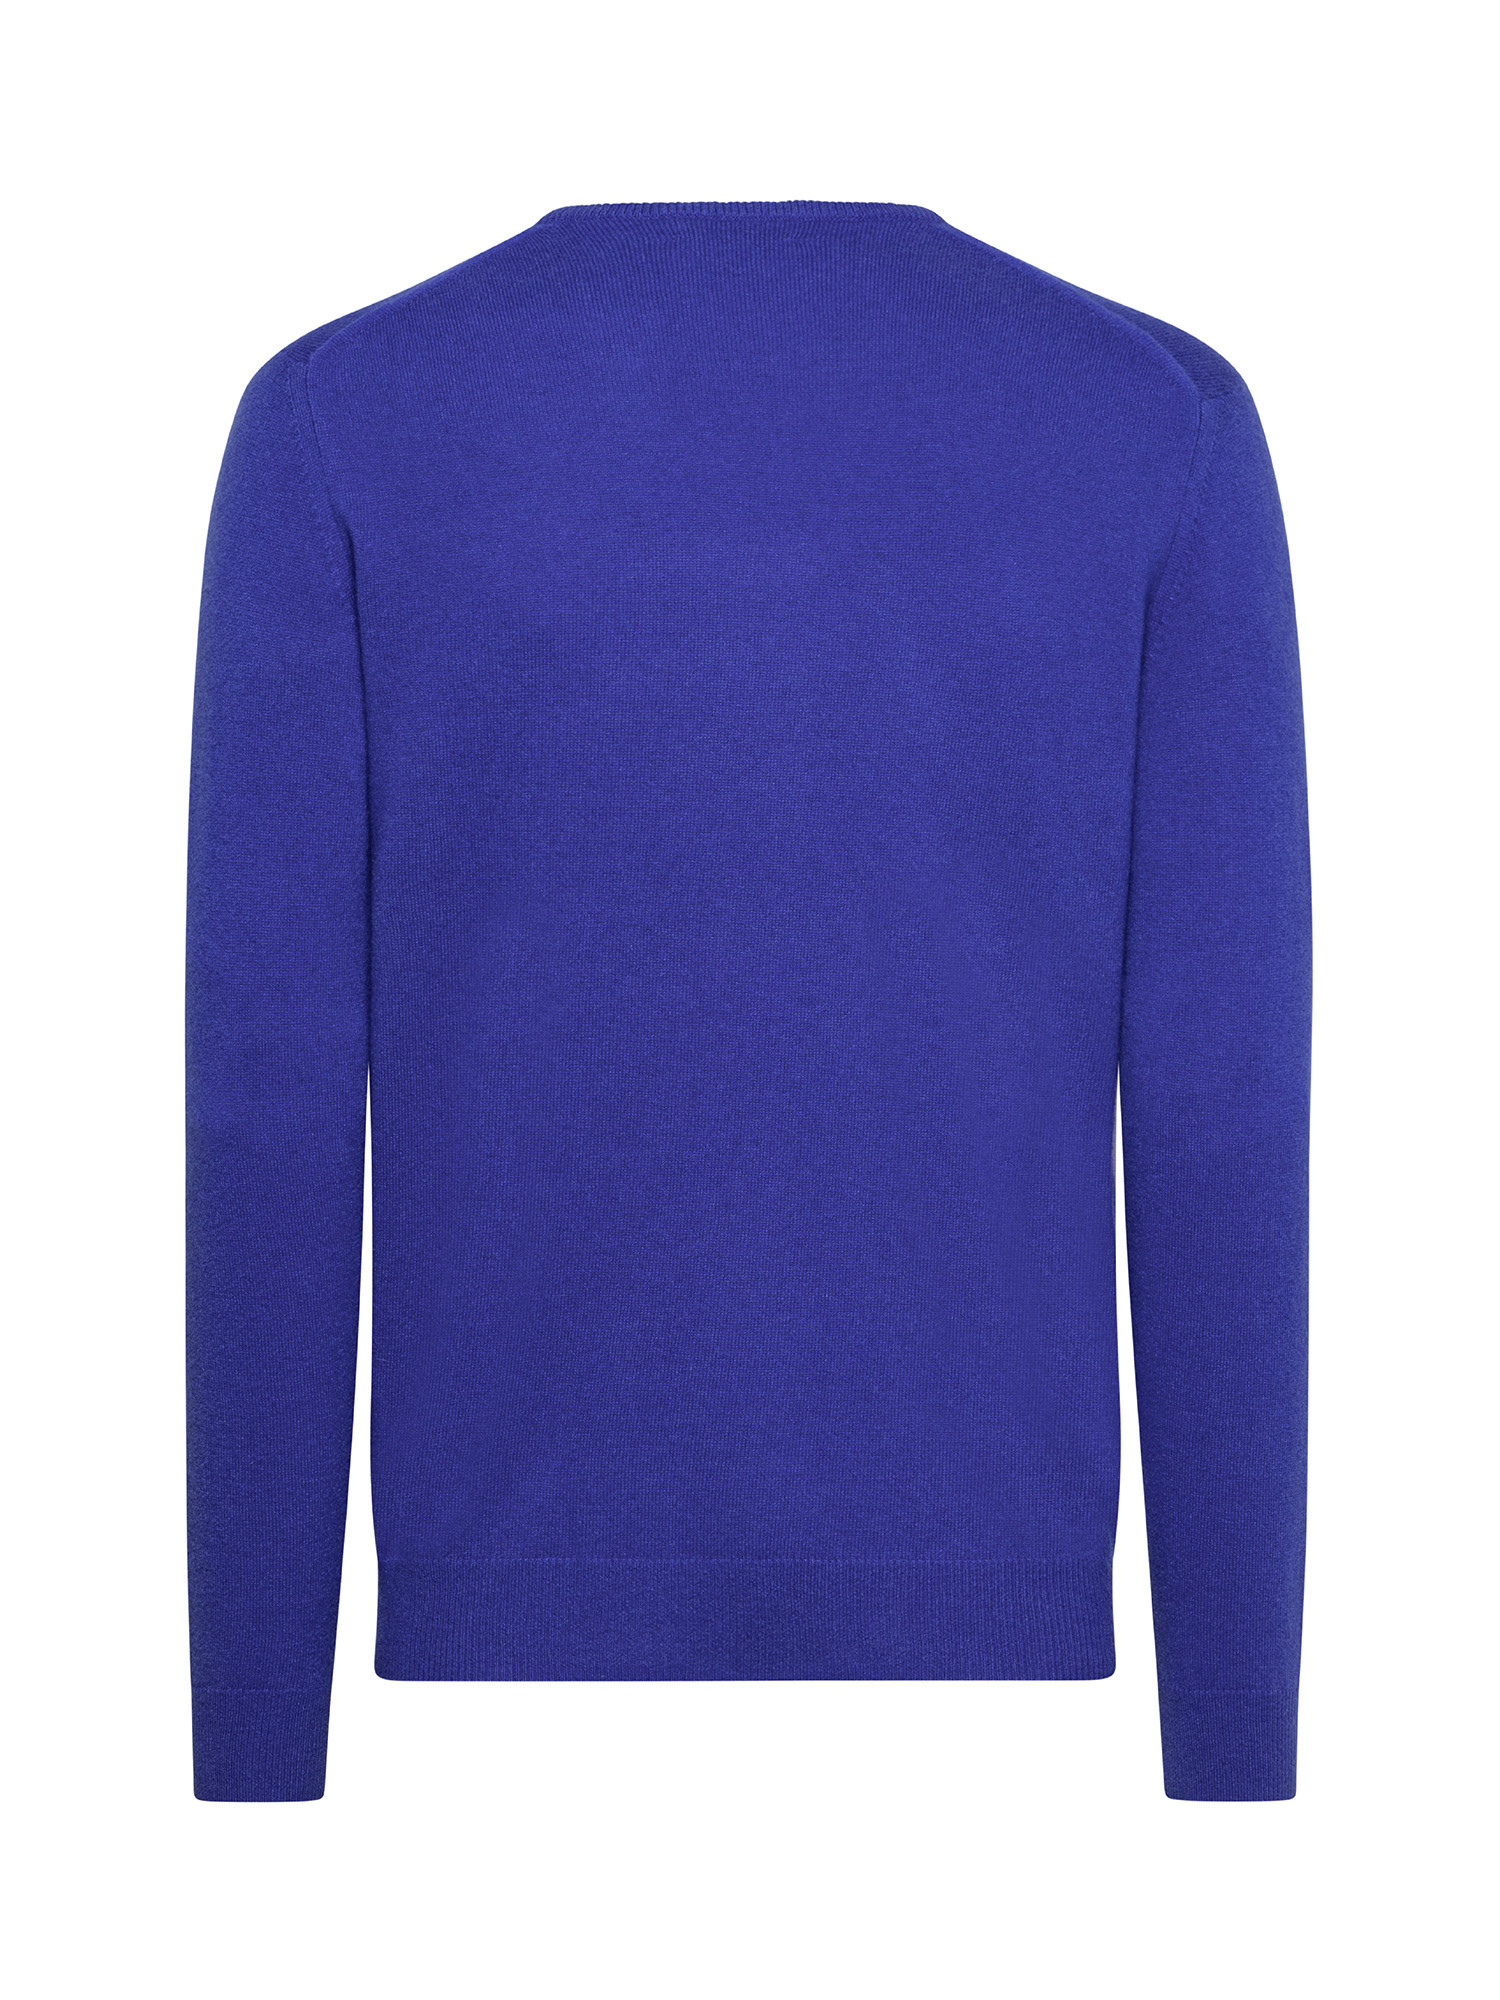 Pure cashmere crewneck pullover, Blue, large image number 1